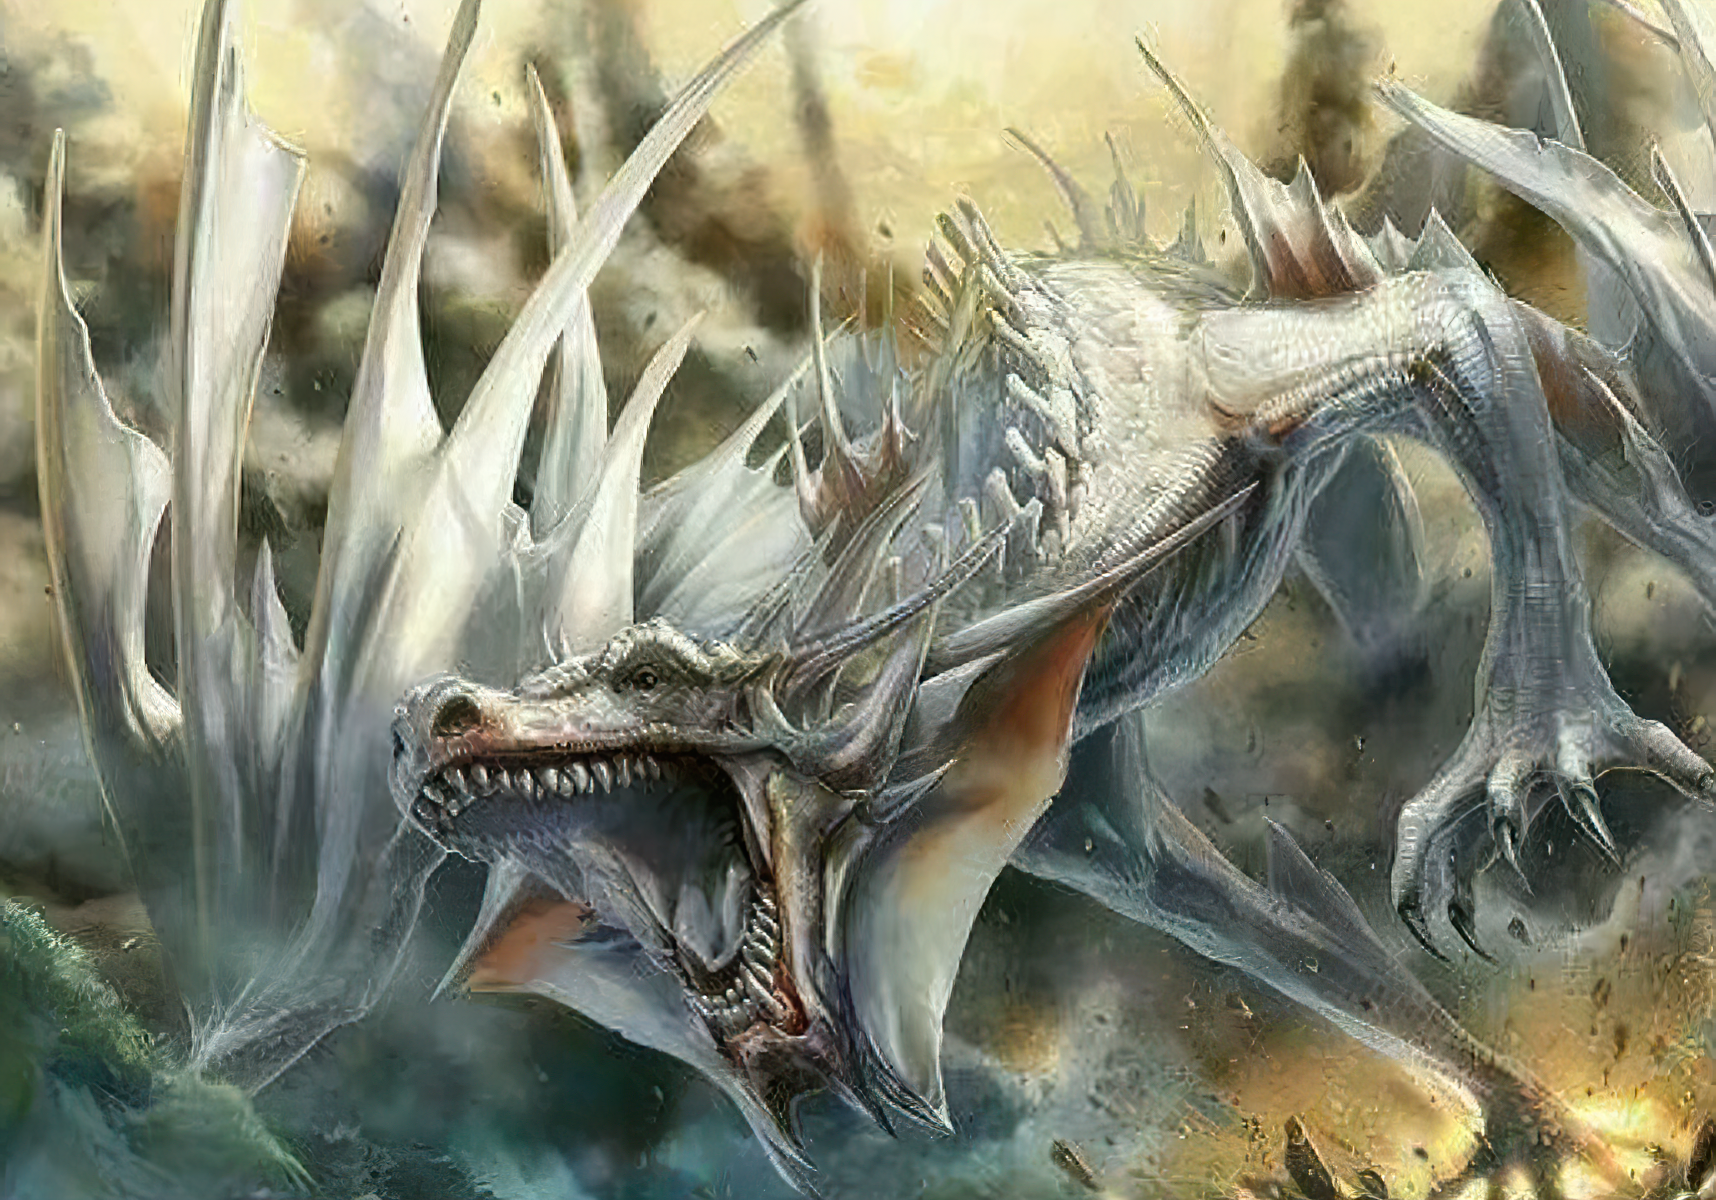 Dragon Raja (Animated Series), Dragon Raja Wiki